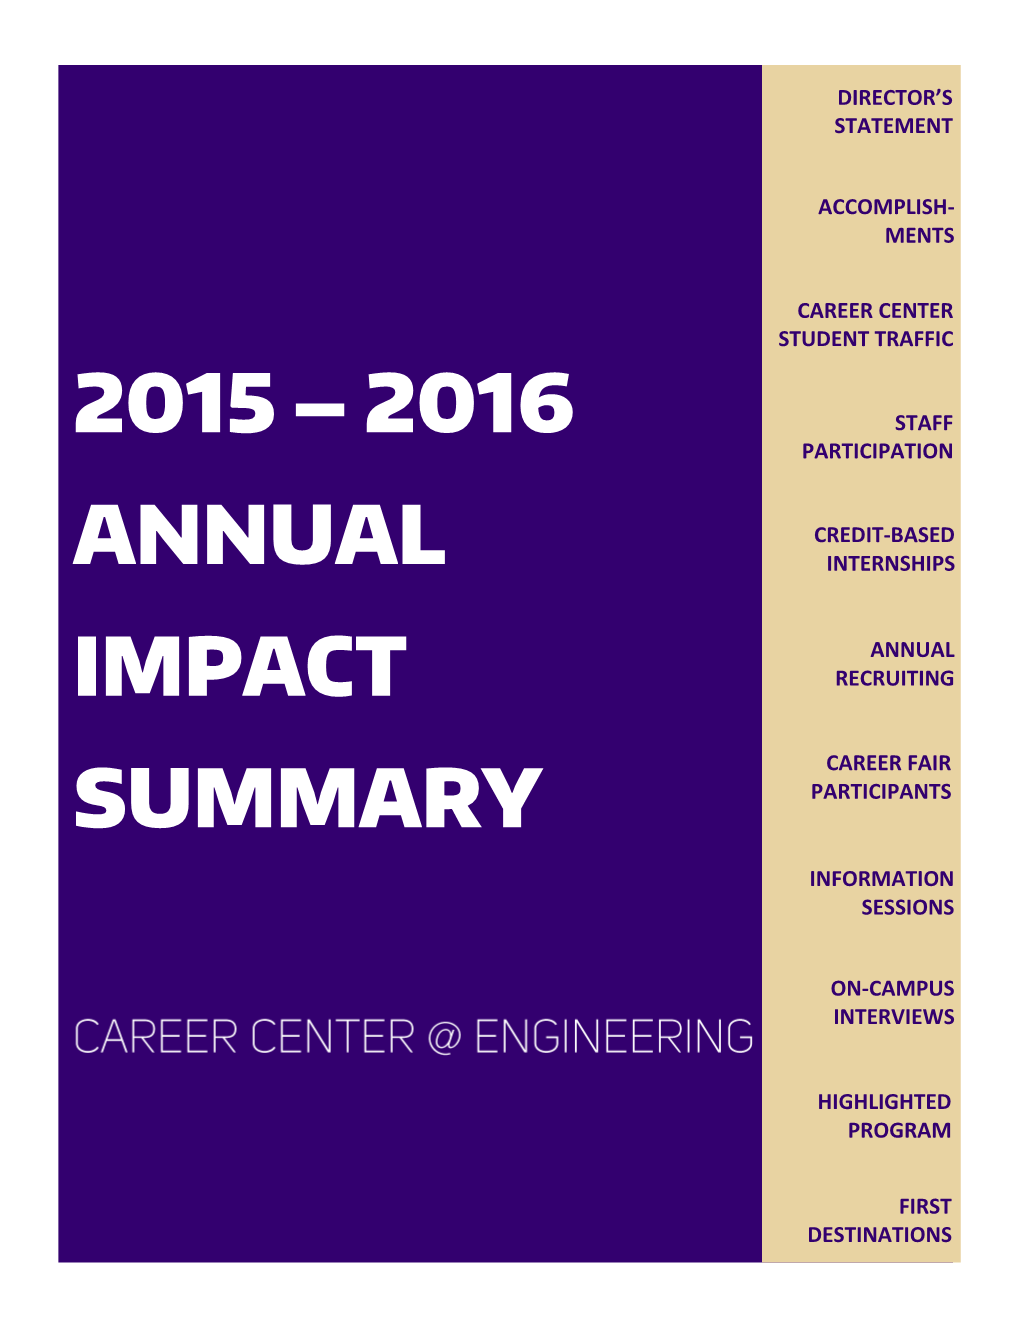 2016 Annual Impact Summary